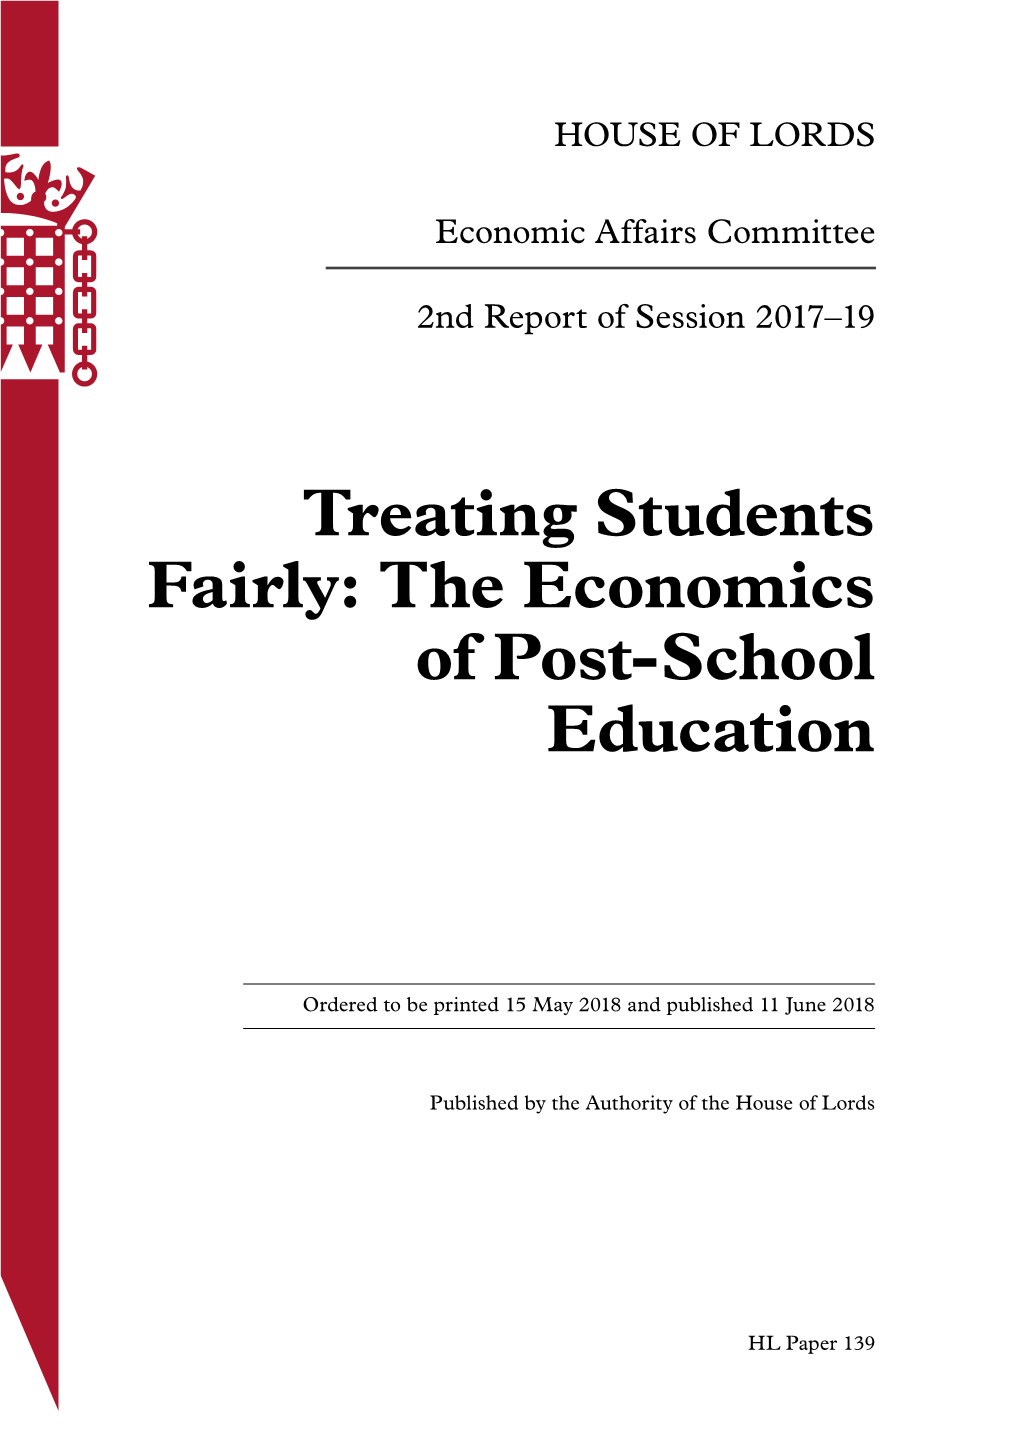 Treating Students Fairly: the Economics of Post-School Education